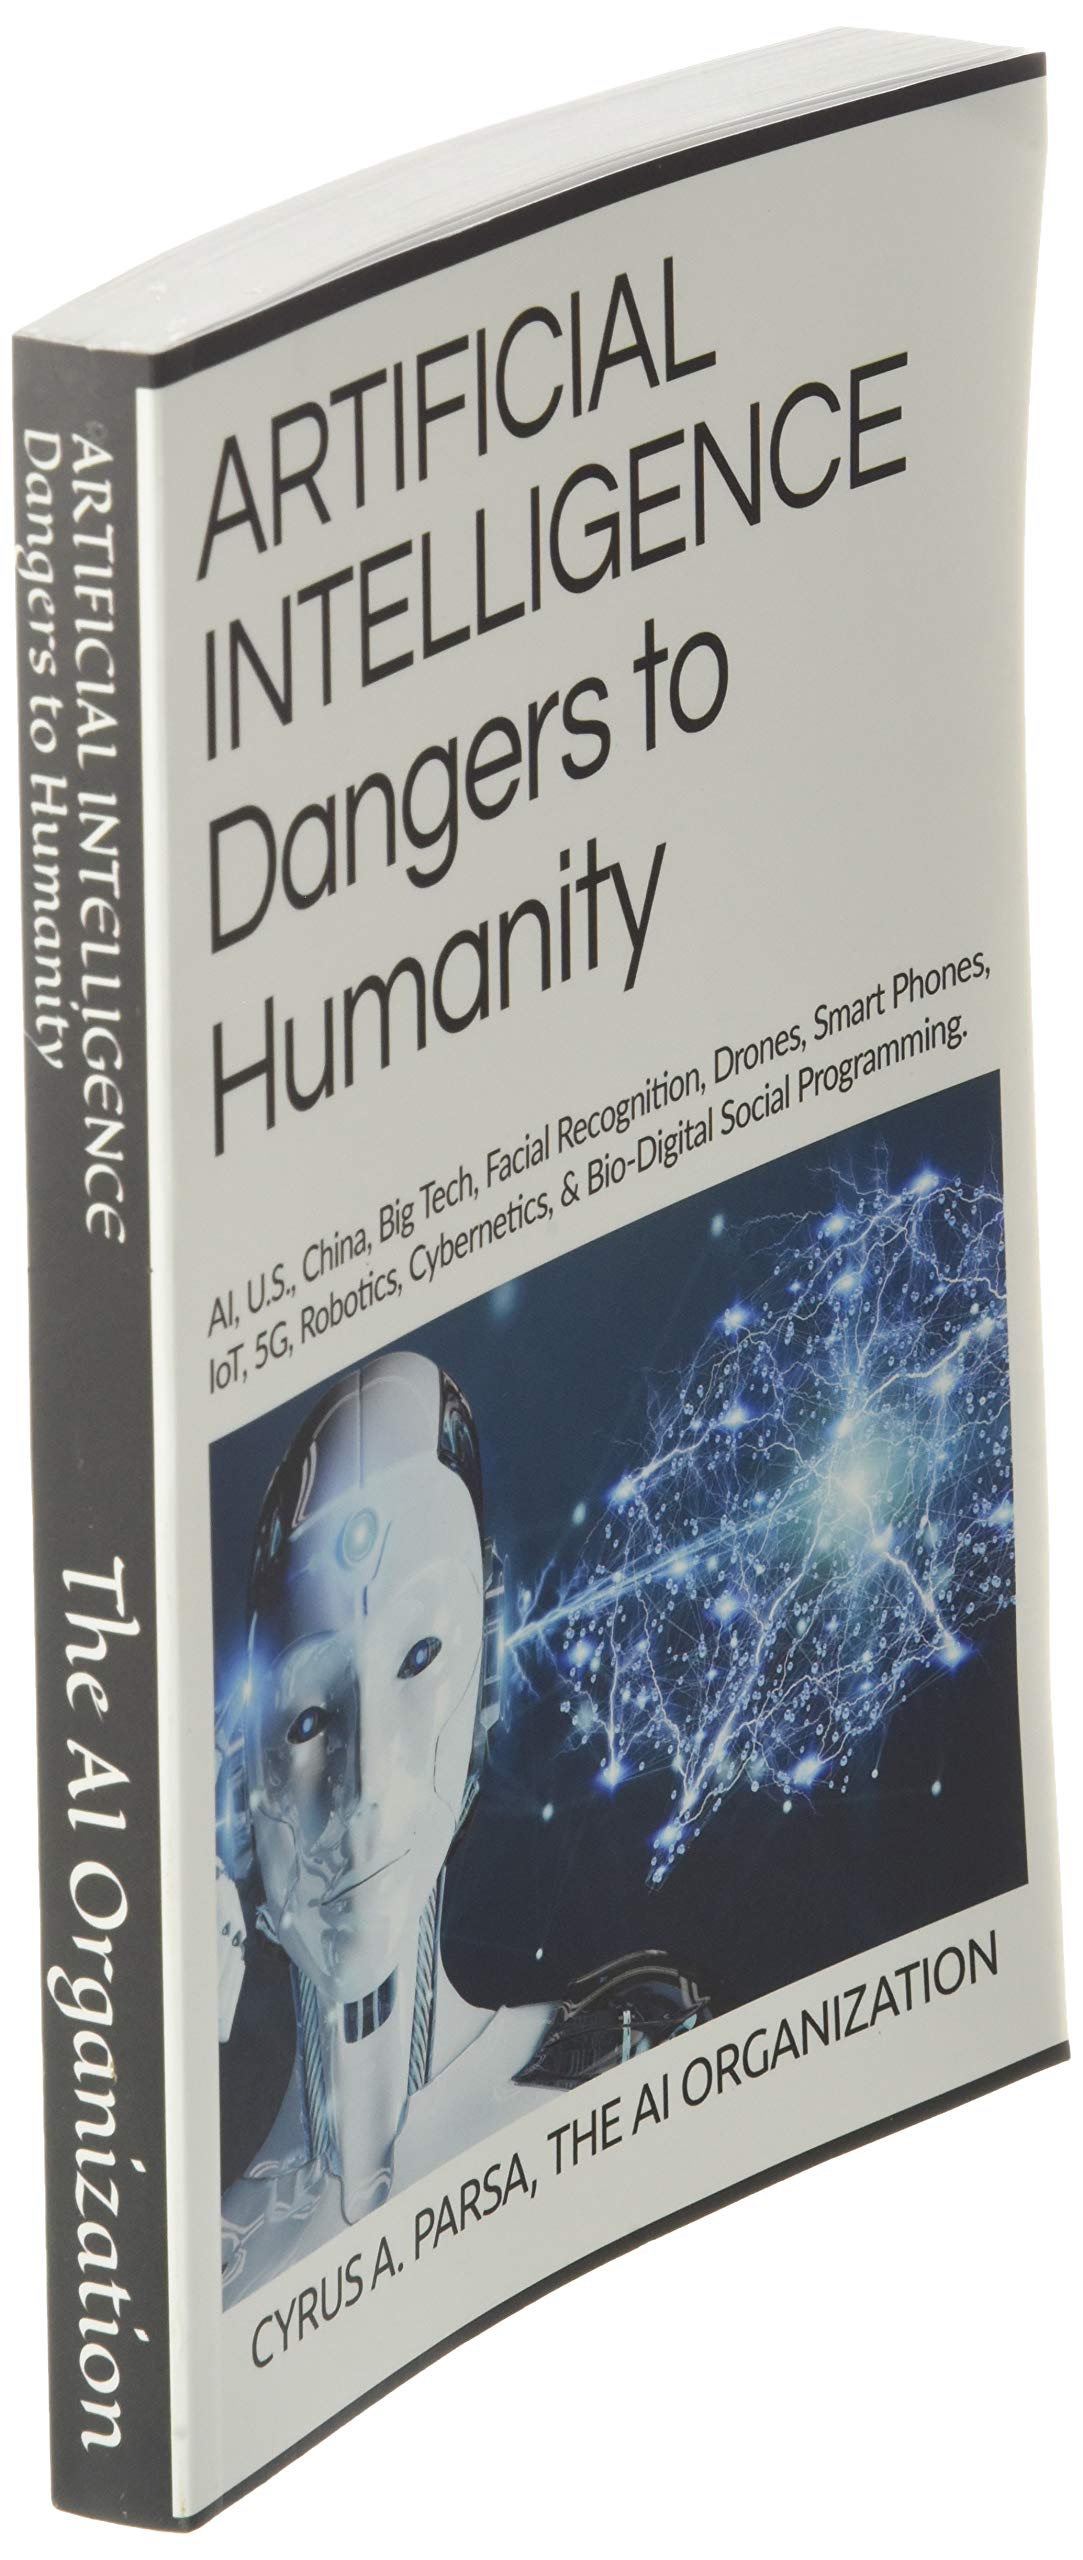 ARTIFICIAL INTELLIGENCE Dangers to Humanity: AI, U. S, China, Big Tech, Facial Recognition, Drones, Smart Phones, IoT, 5G, Robotics, Cybernetics, and Bio-Digital Social Program